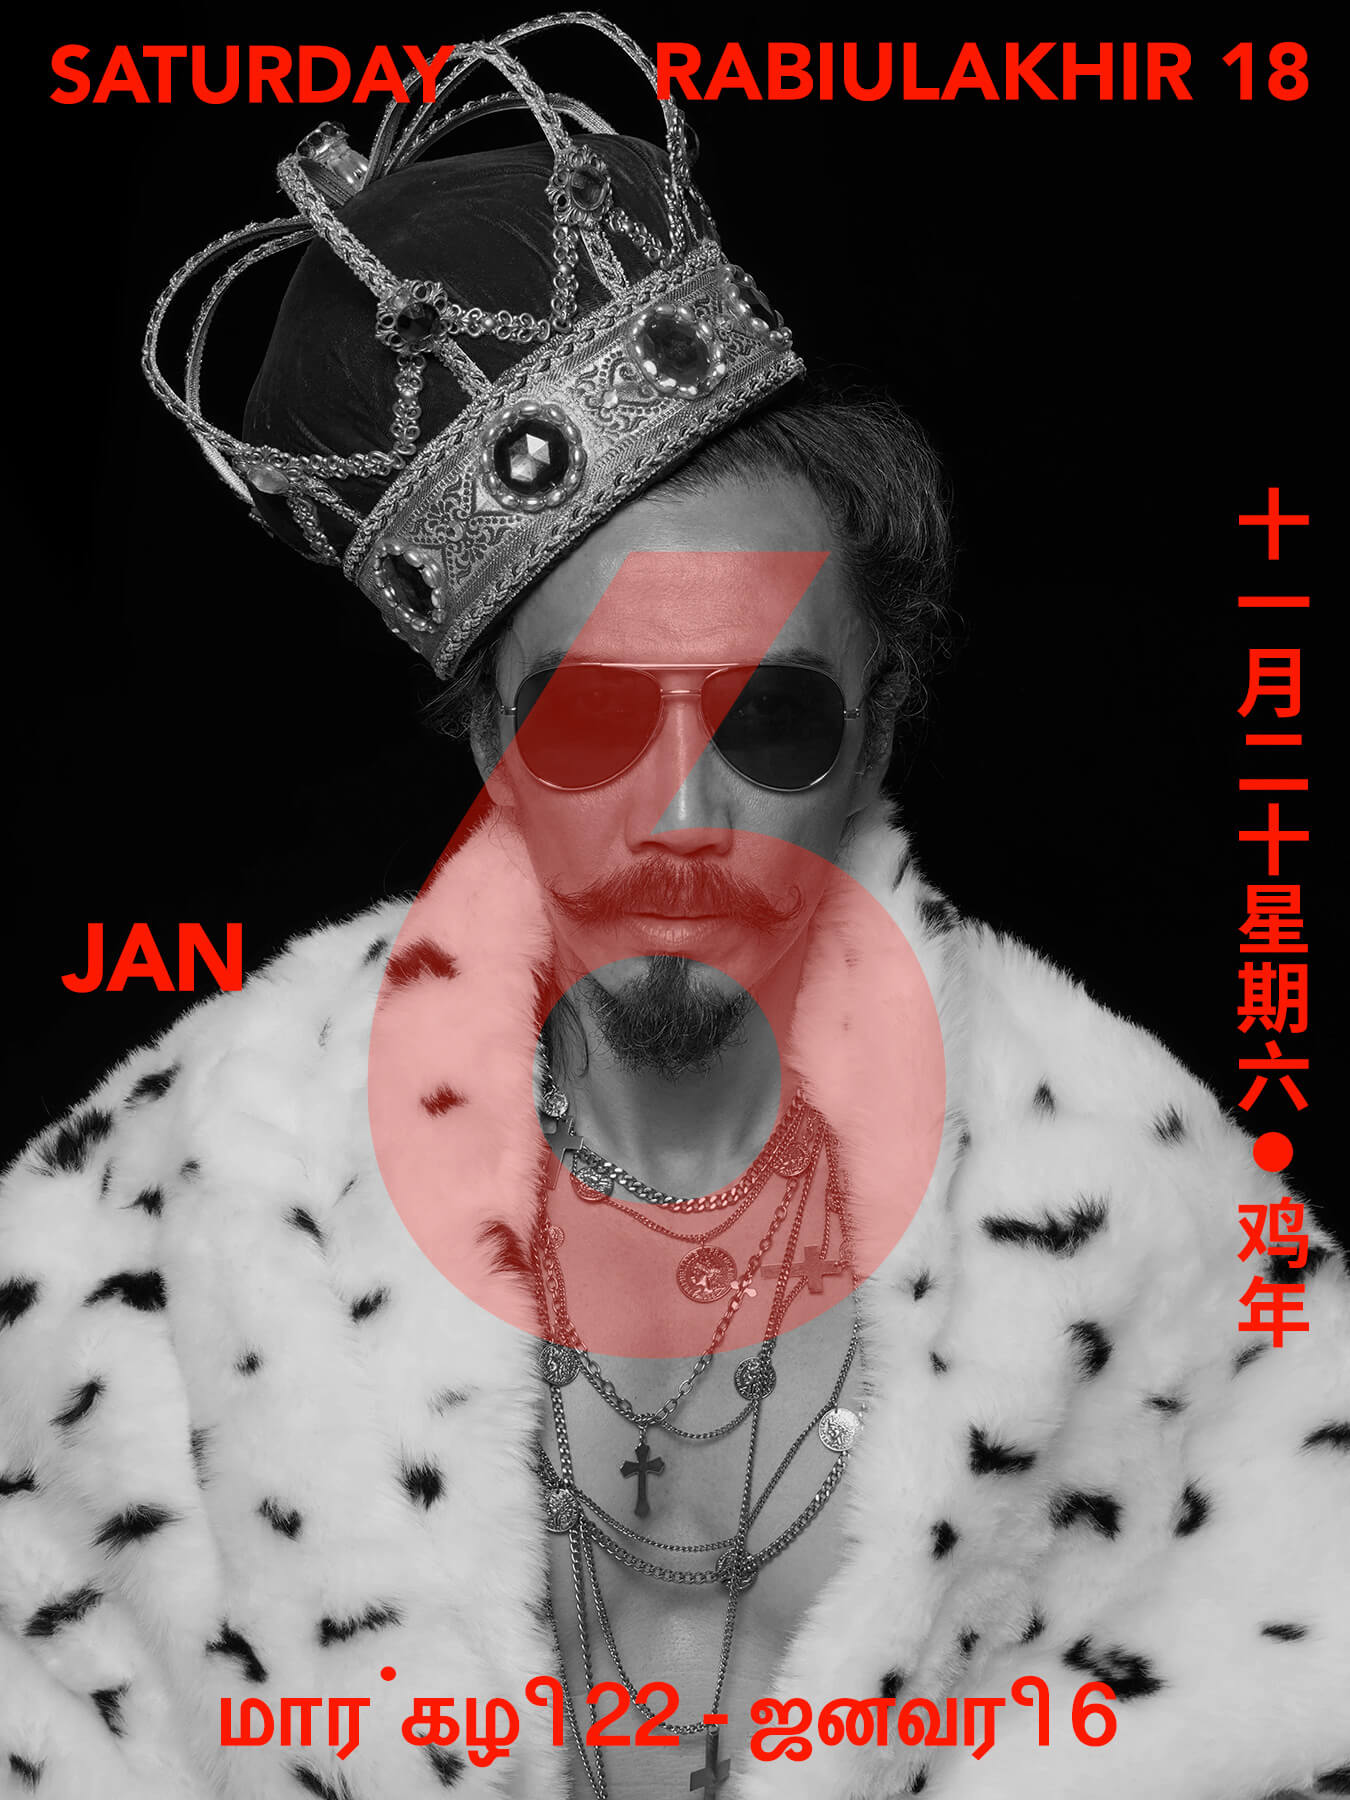 6 Jan 2018 Derong is dressed as a king